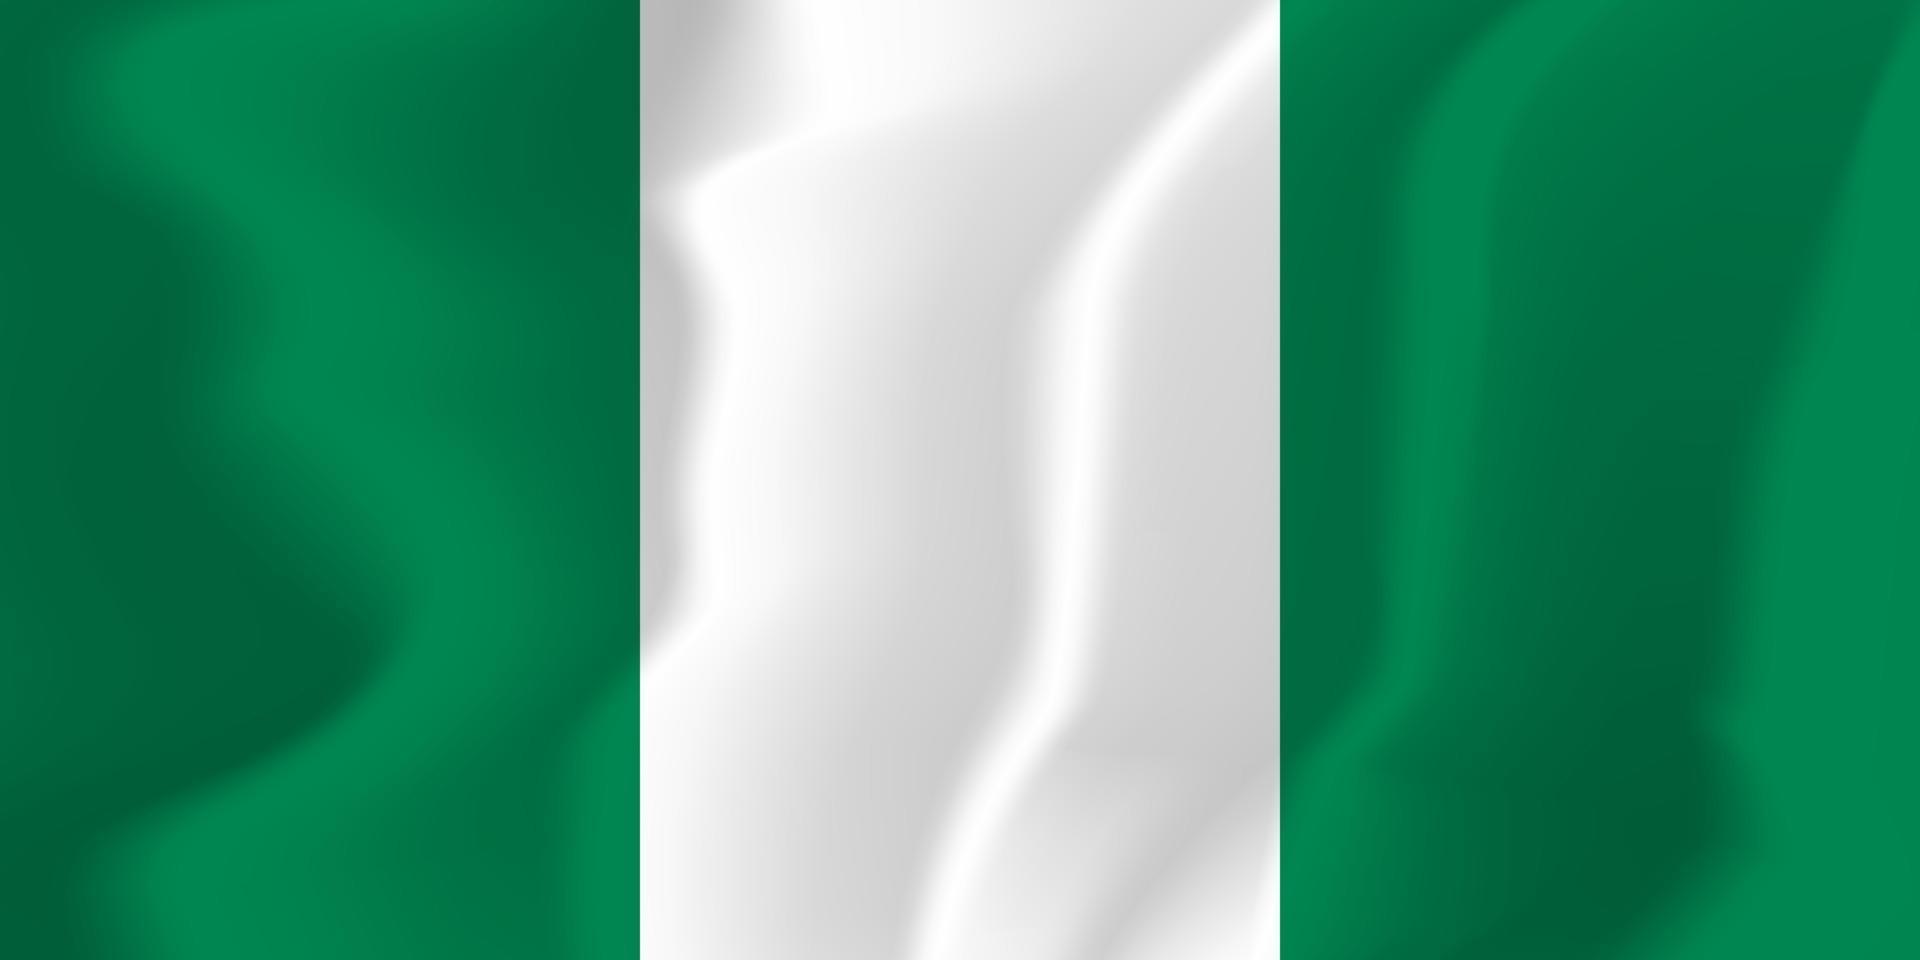 Nigeria National Waving Flag Background Illustration vector